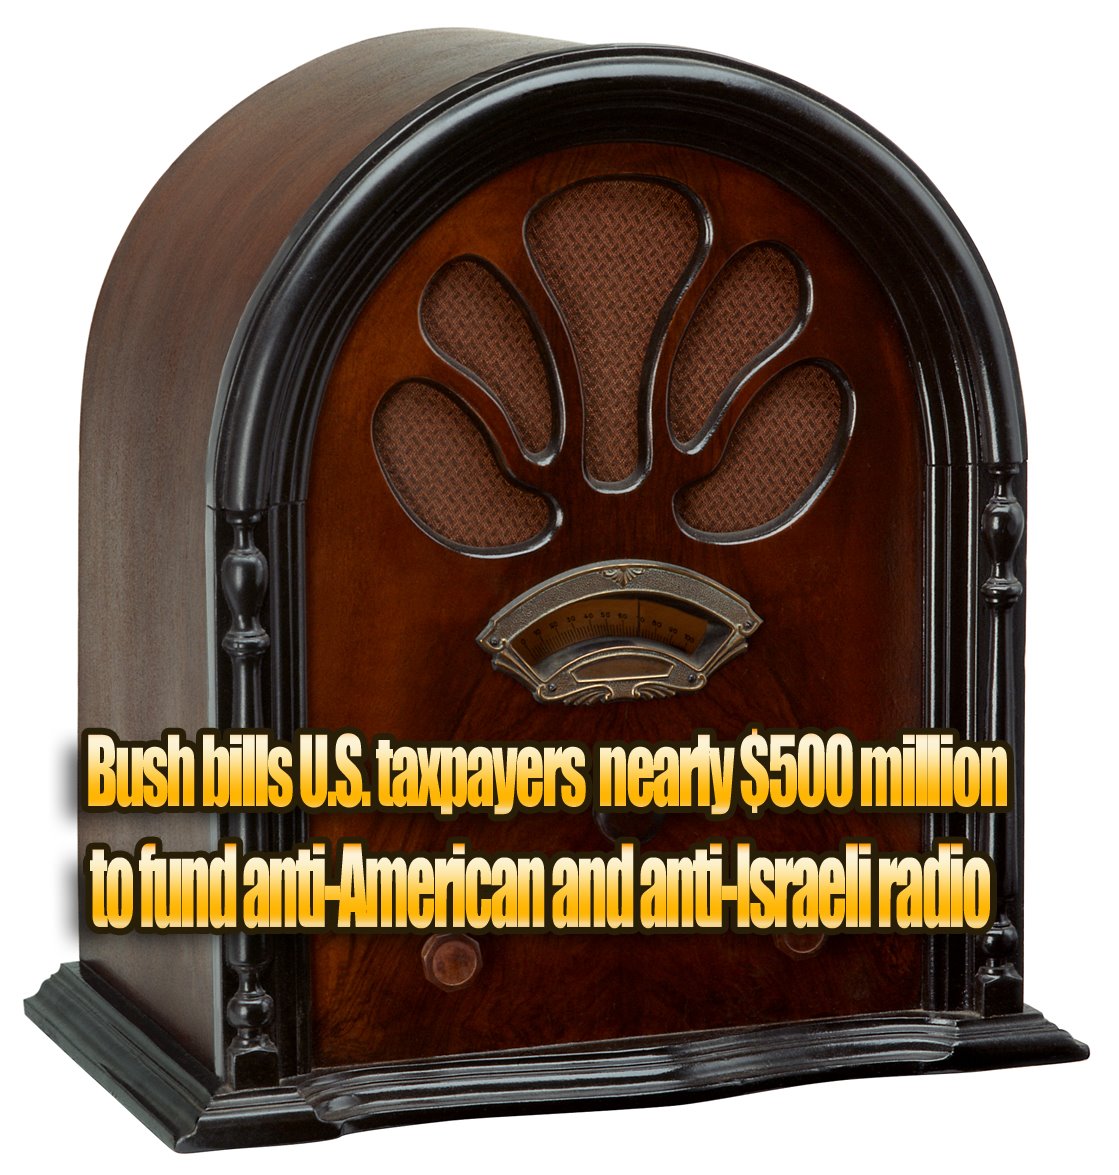 [Bush-bills-U.S.-taxpayers-nearly-$500-million.jpg]